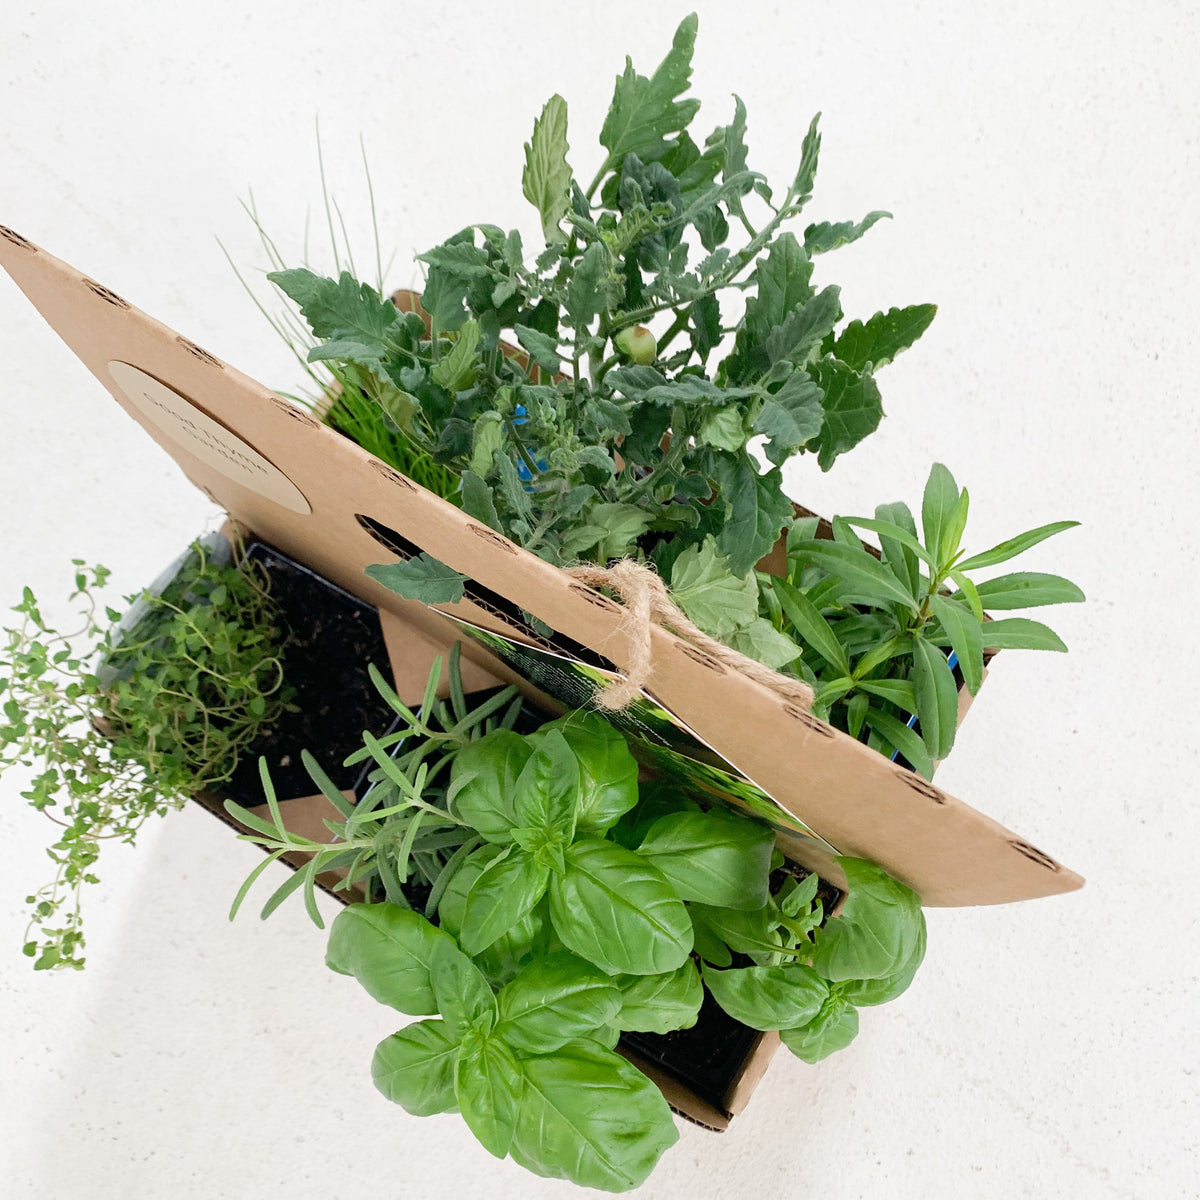 Brunch Bag Garden Kit with seasonal herb plants